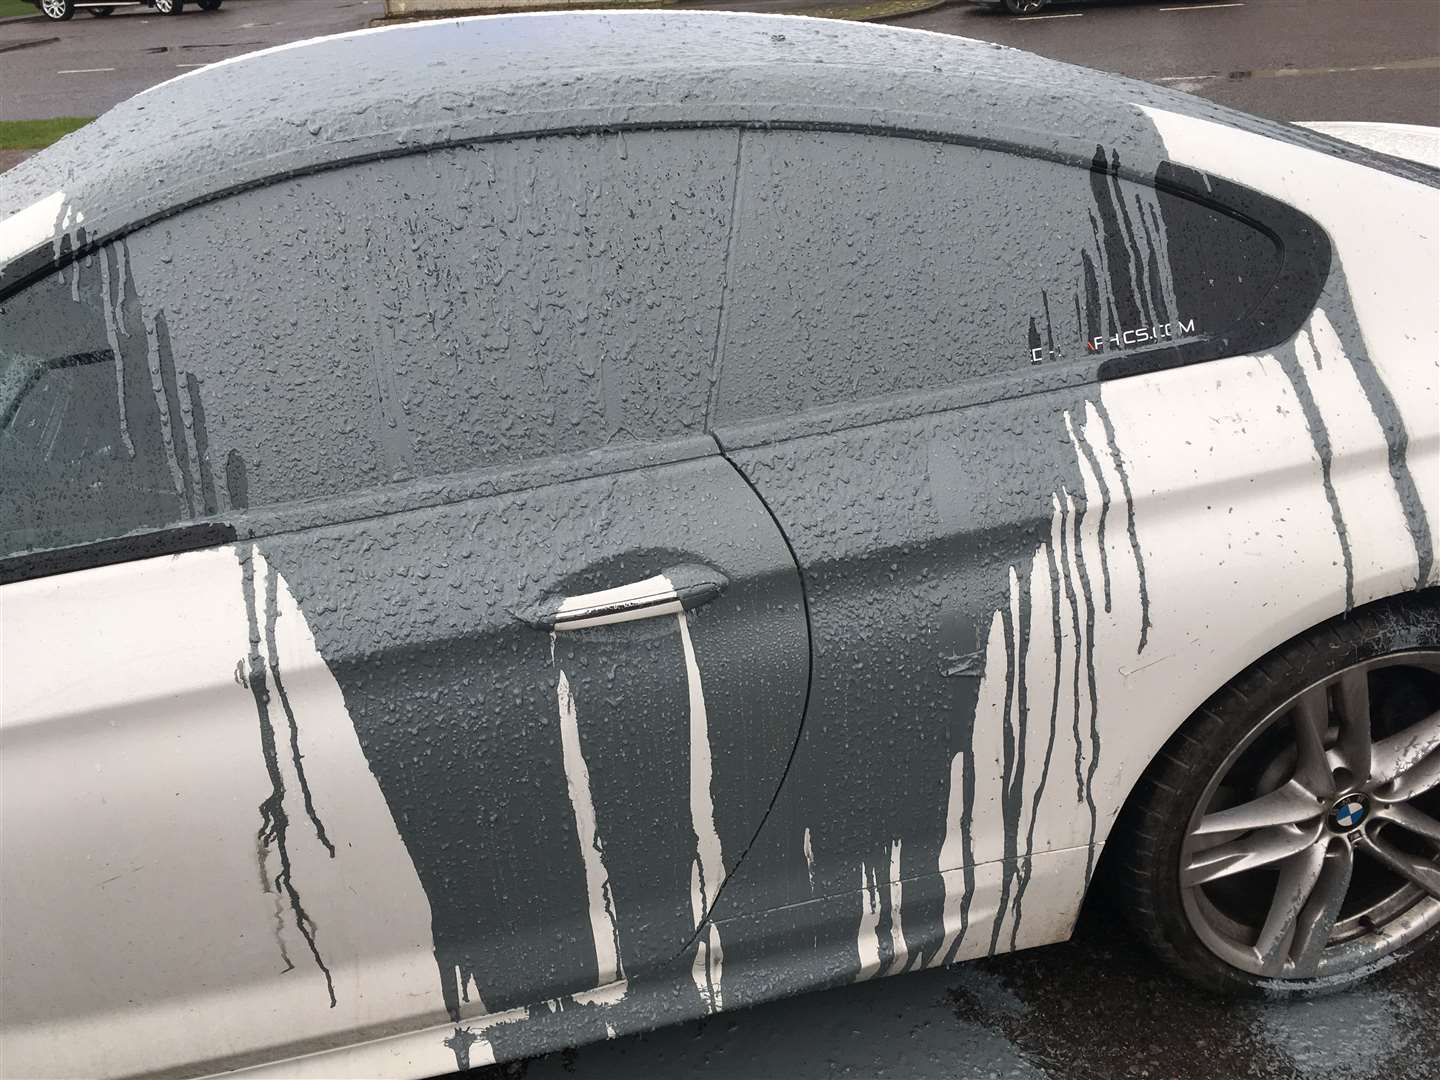 Vandalism at a car in Forres.